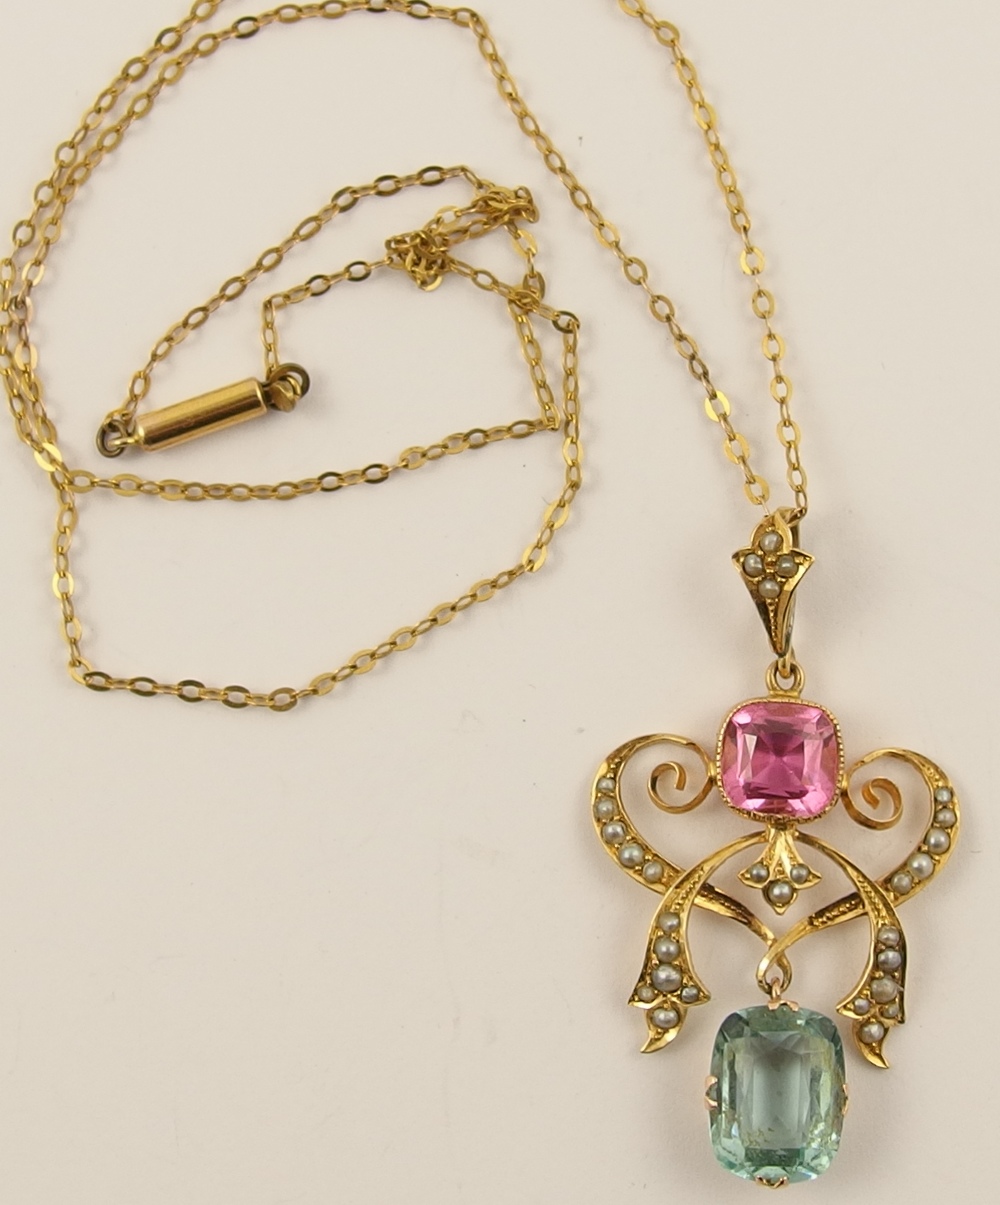 A 9ct Edwardian gem set pendant and chain